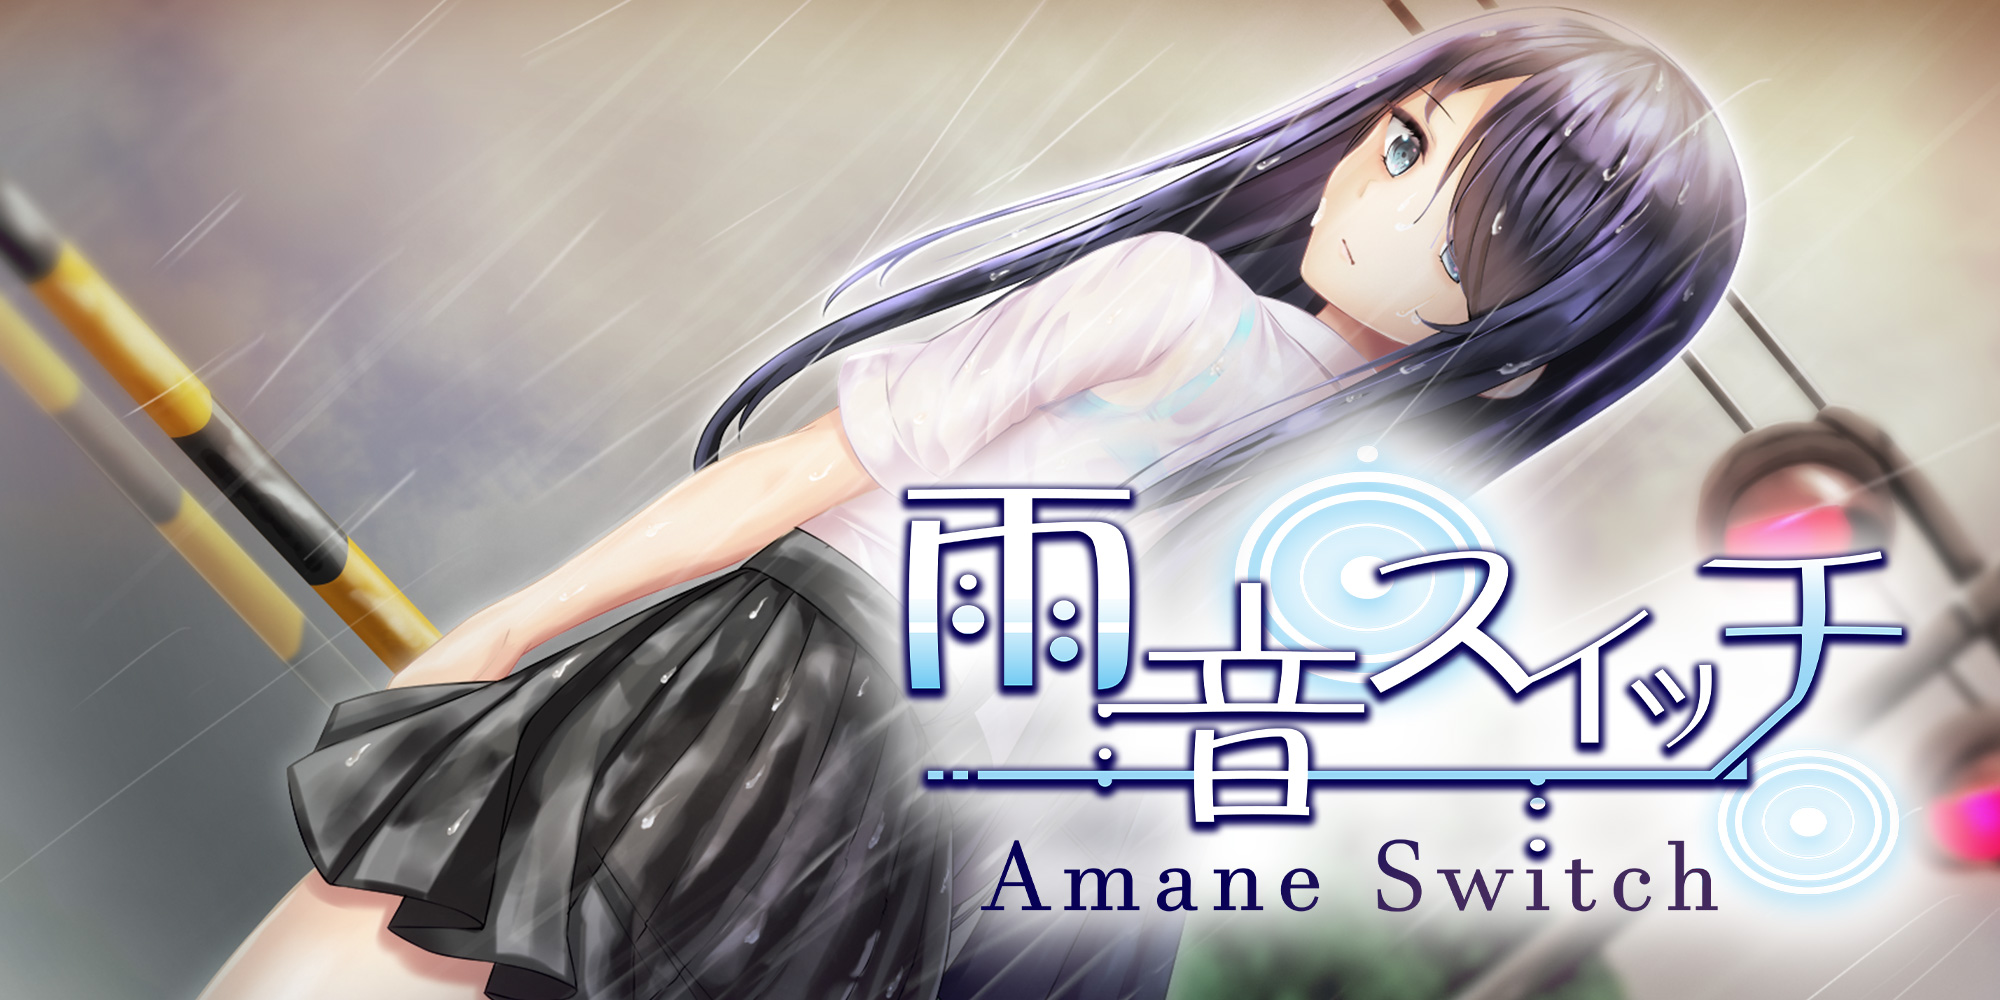 Amane 2 switch